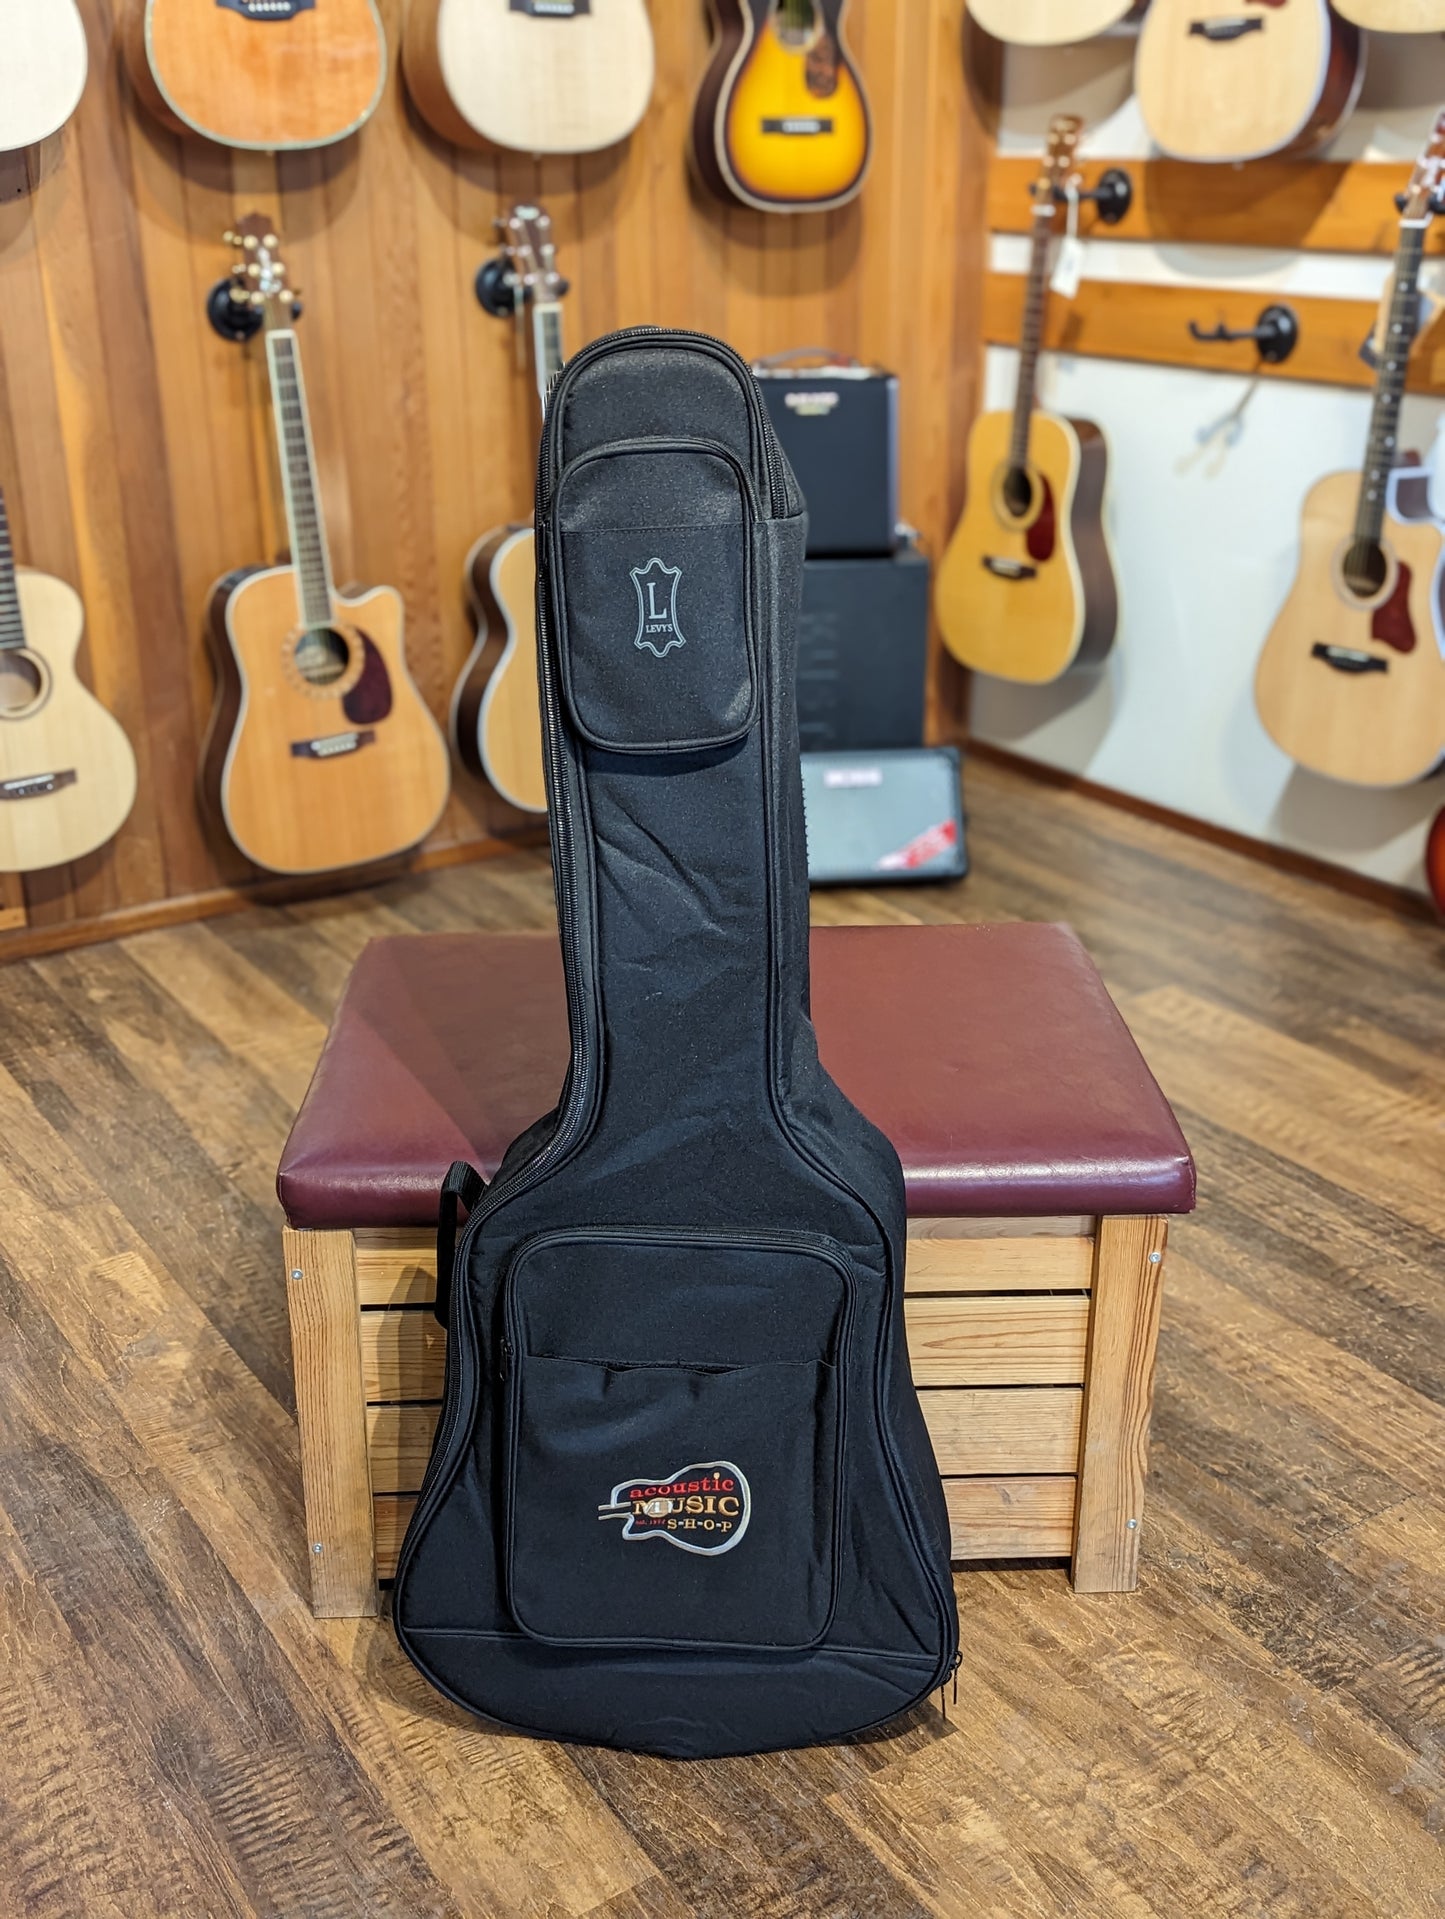 Seagull Guitars S6 Cedar Original Slim Acoustic Guitar w/Gig Bag (Store Demo)